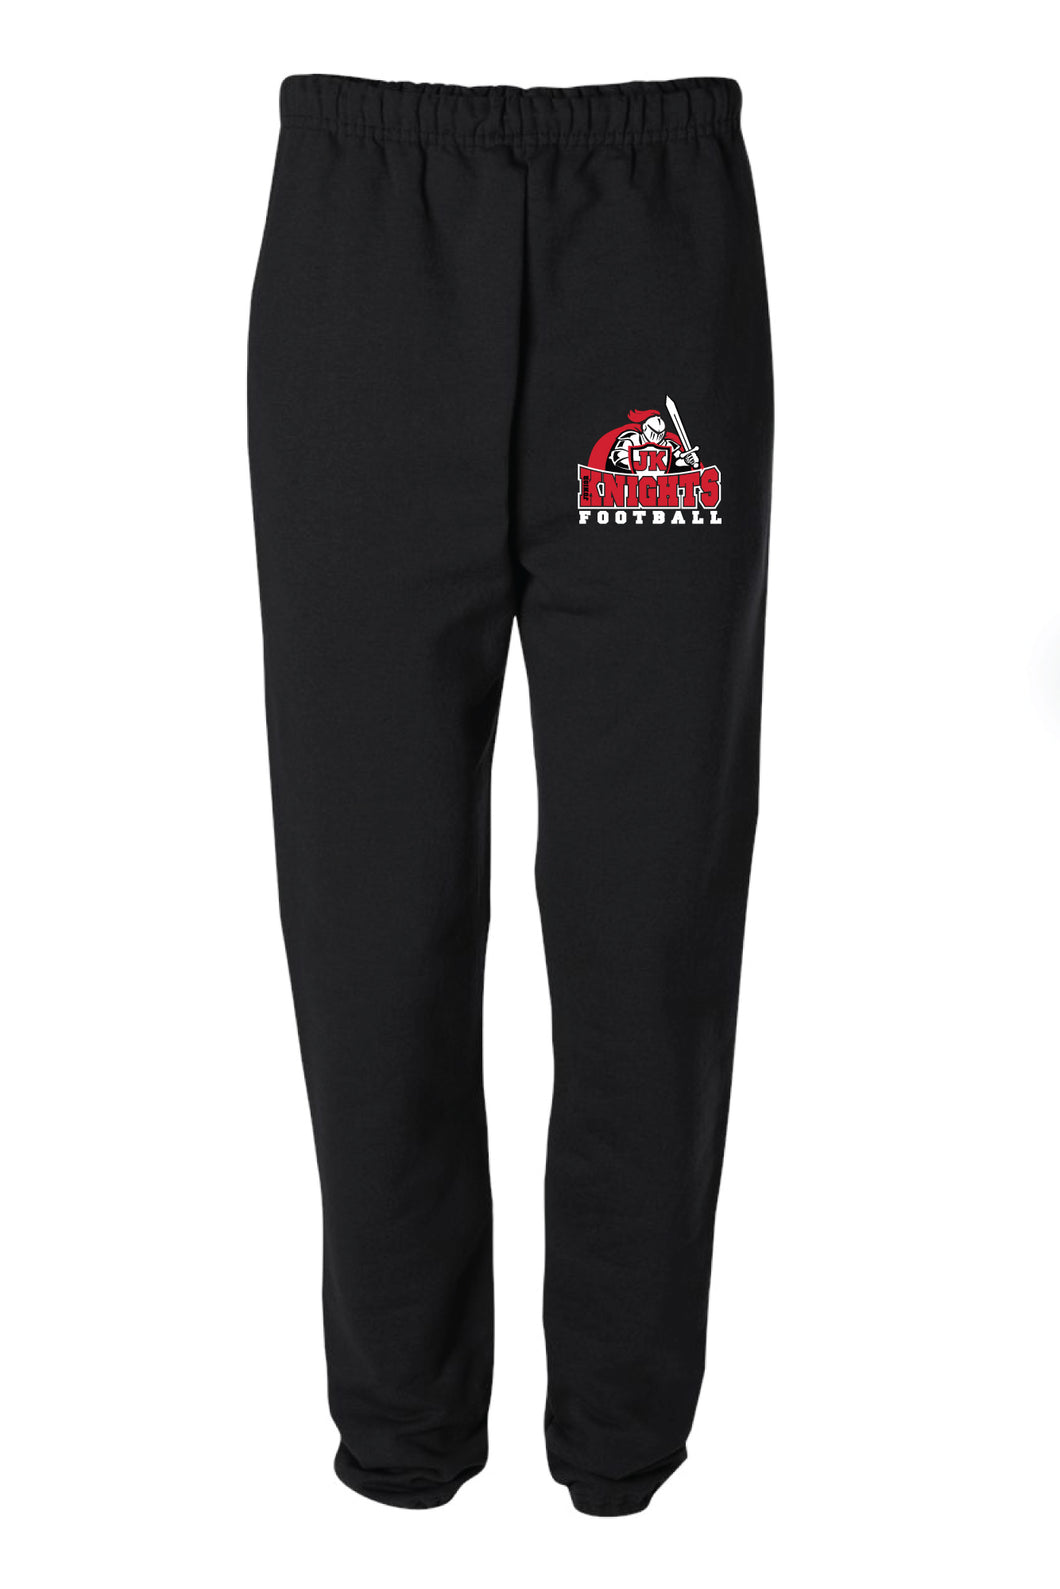 Wharton Football Cotton Sweatpants - Black - 5KounT